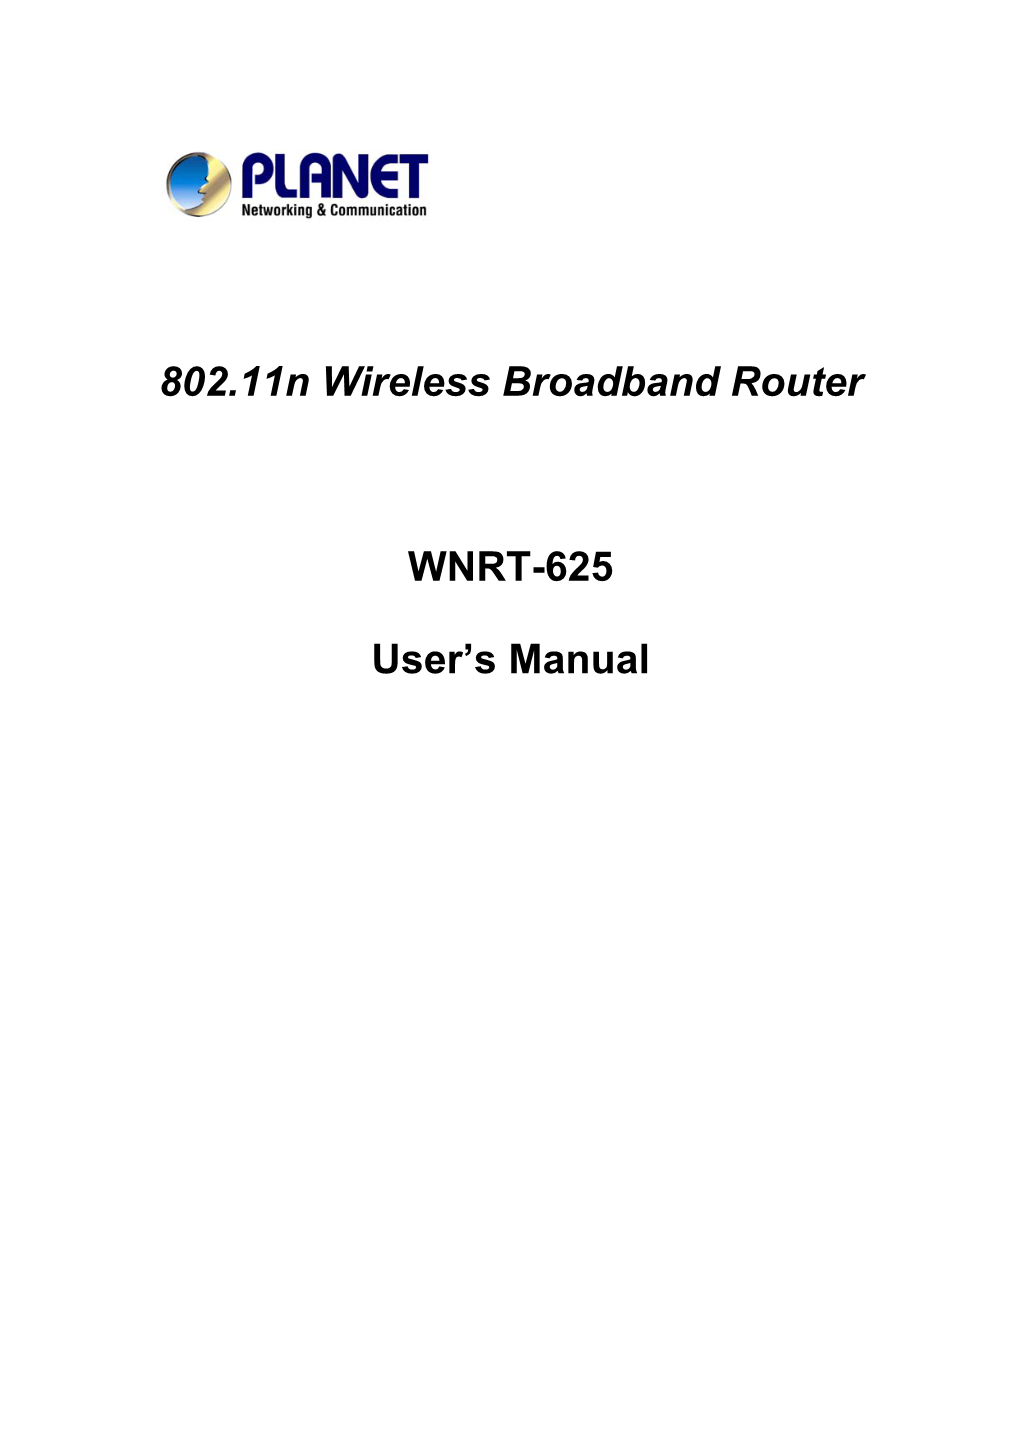 802.11N Wireless Broadband Router WNRT-625 User's Manual